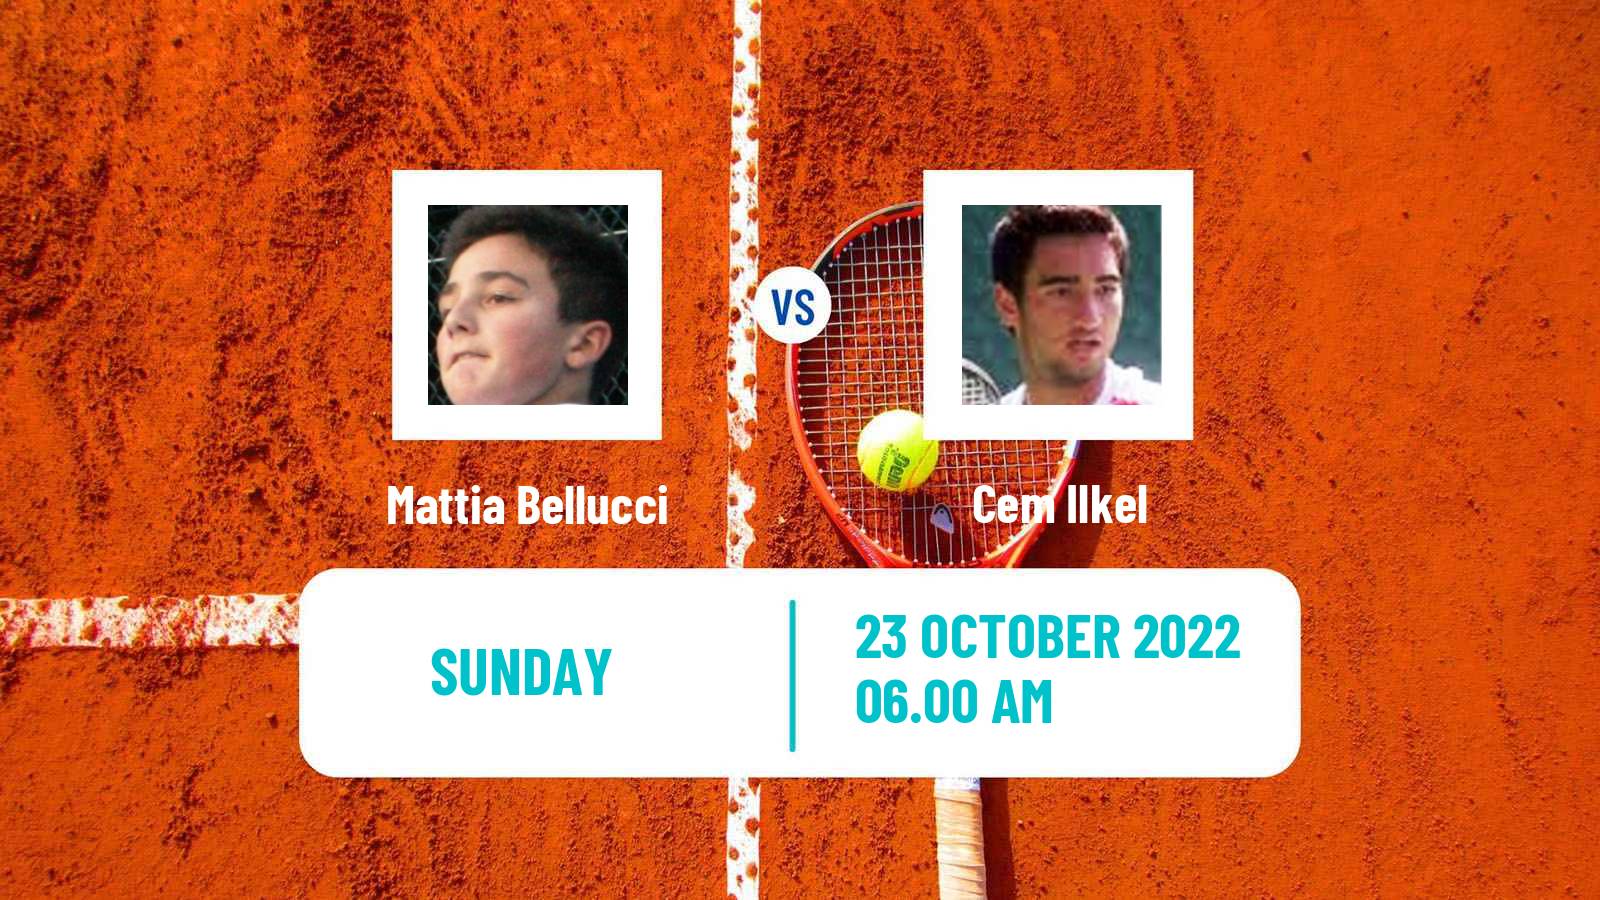 Tennis ATP Challenger Mattia Bellucci - Cem Ilkel